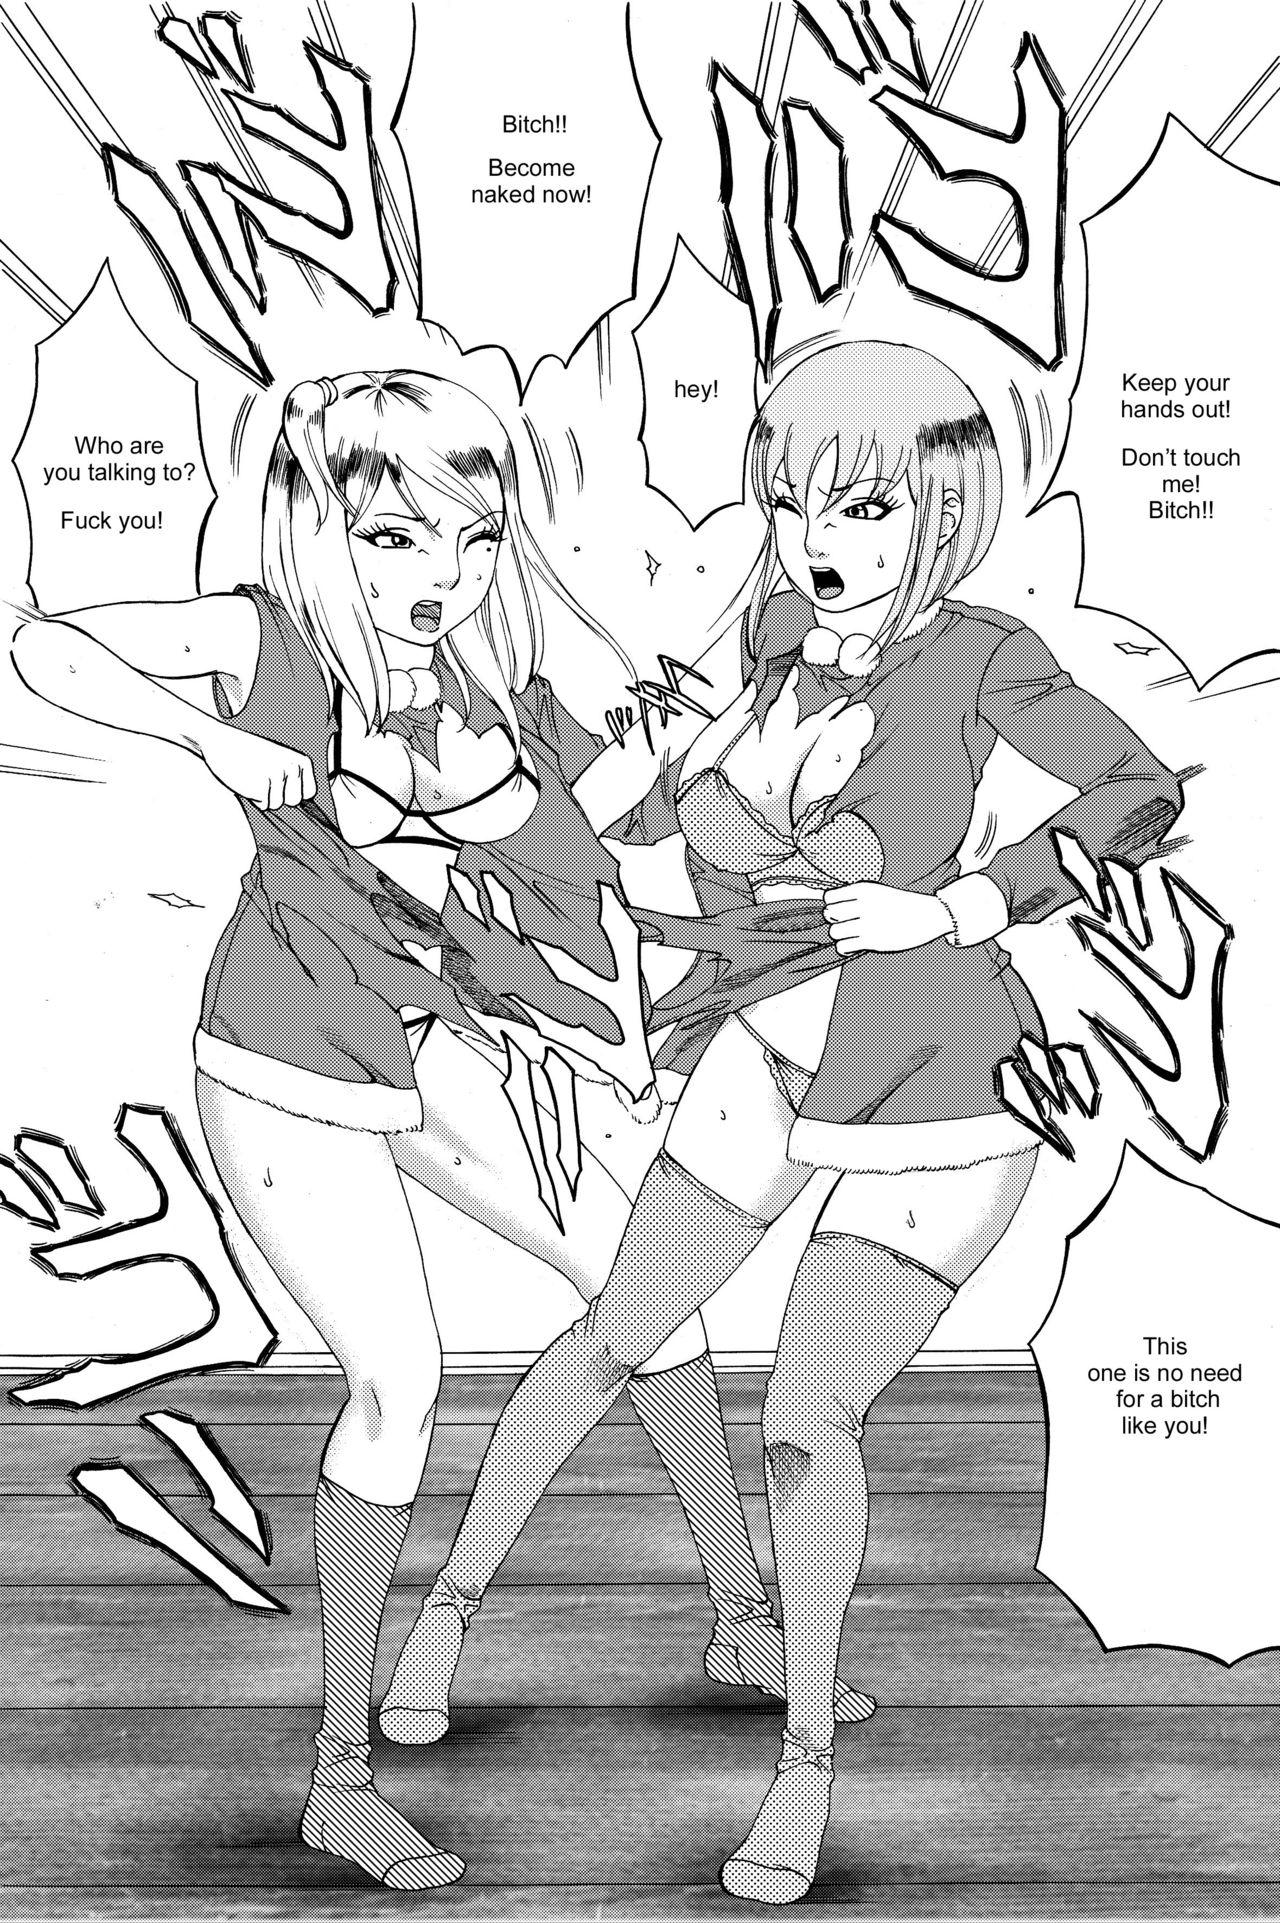 Spreading Fuwapoyo crimson/catfight comic Action - Page 11